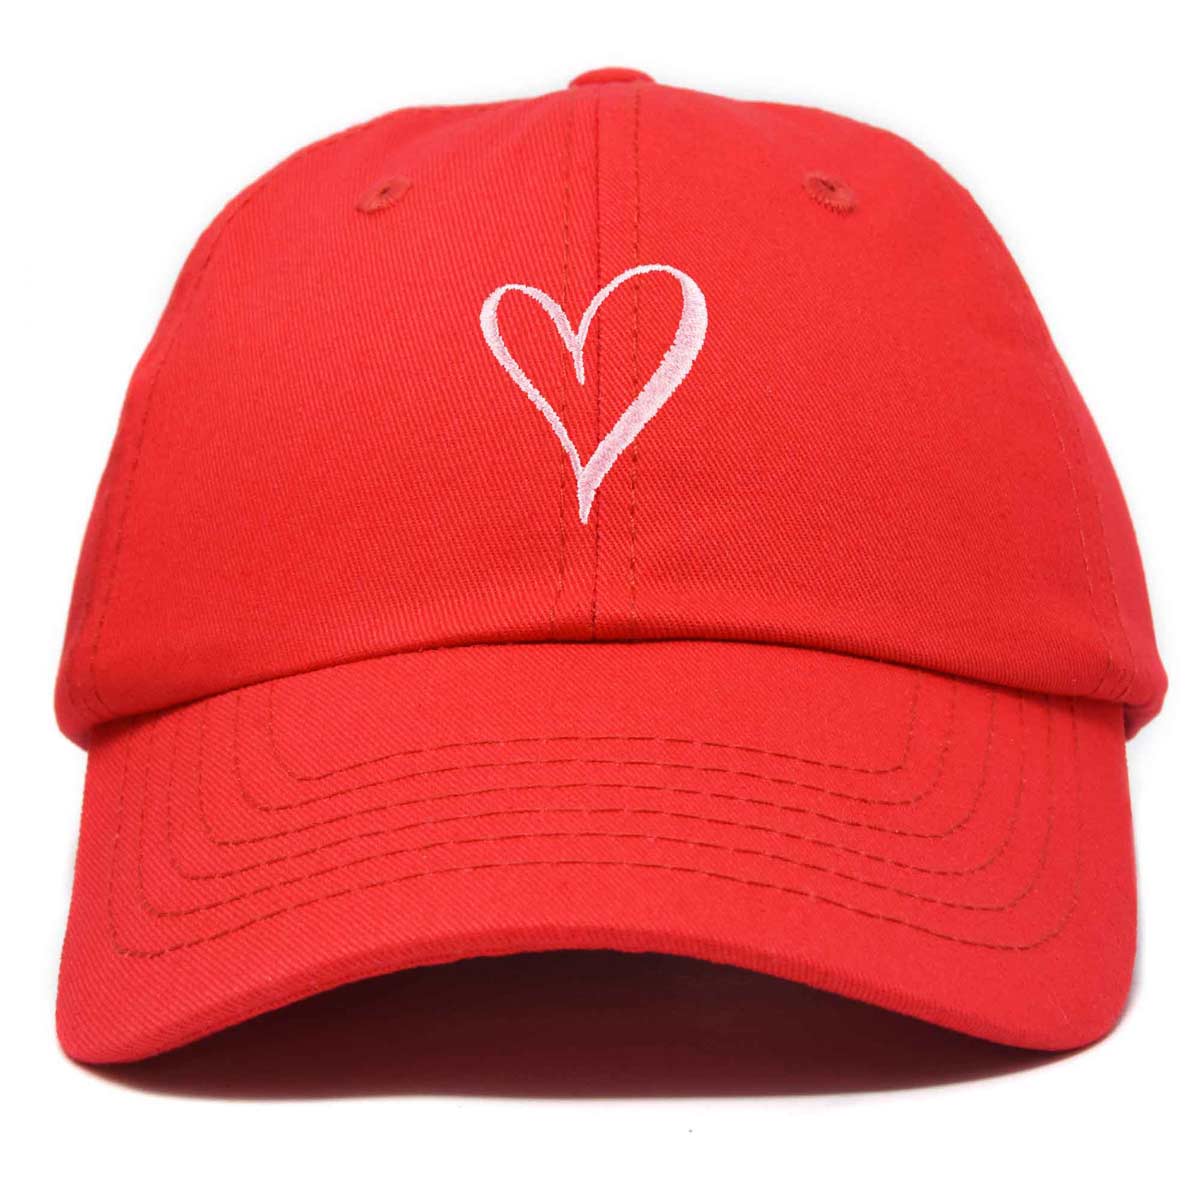 Dalix Heart Hat